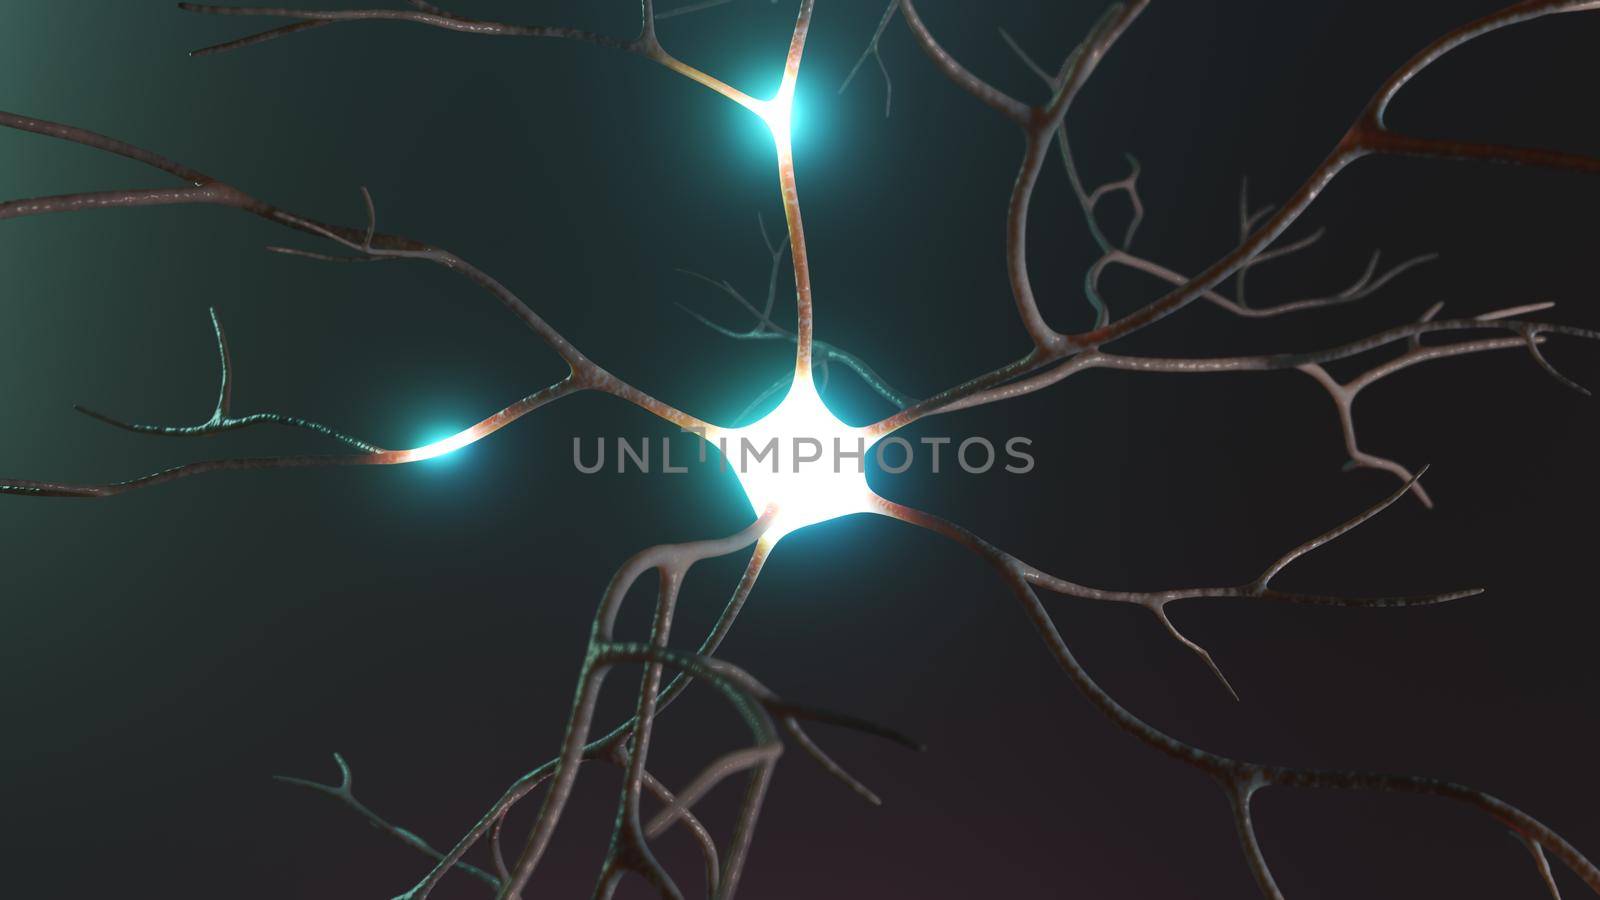 Neuron cluster signal transfer inside human brain